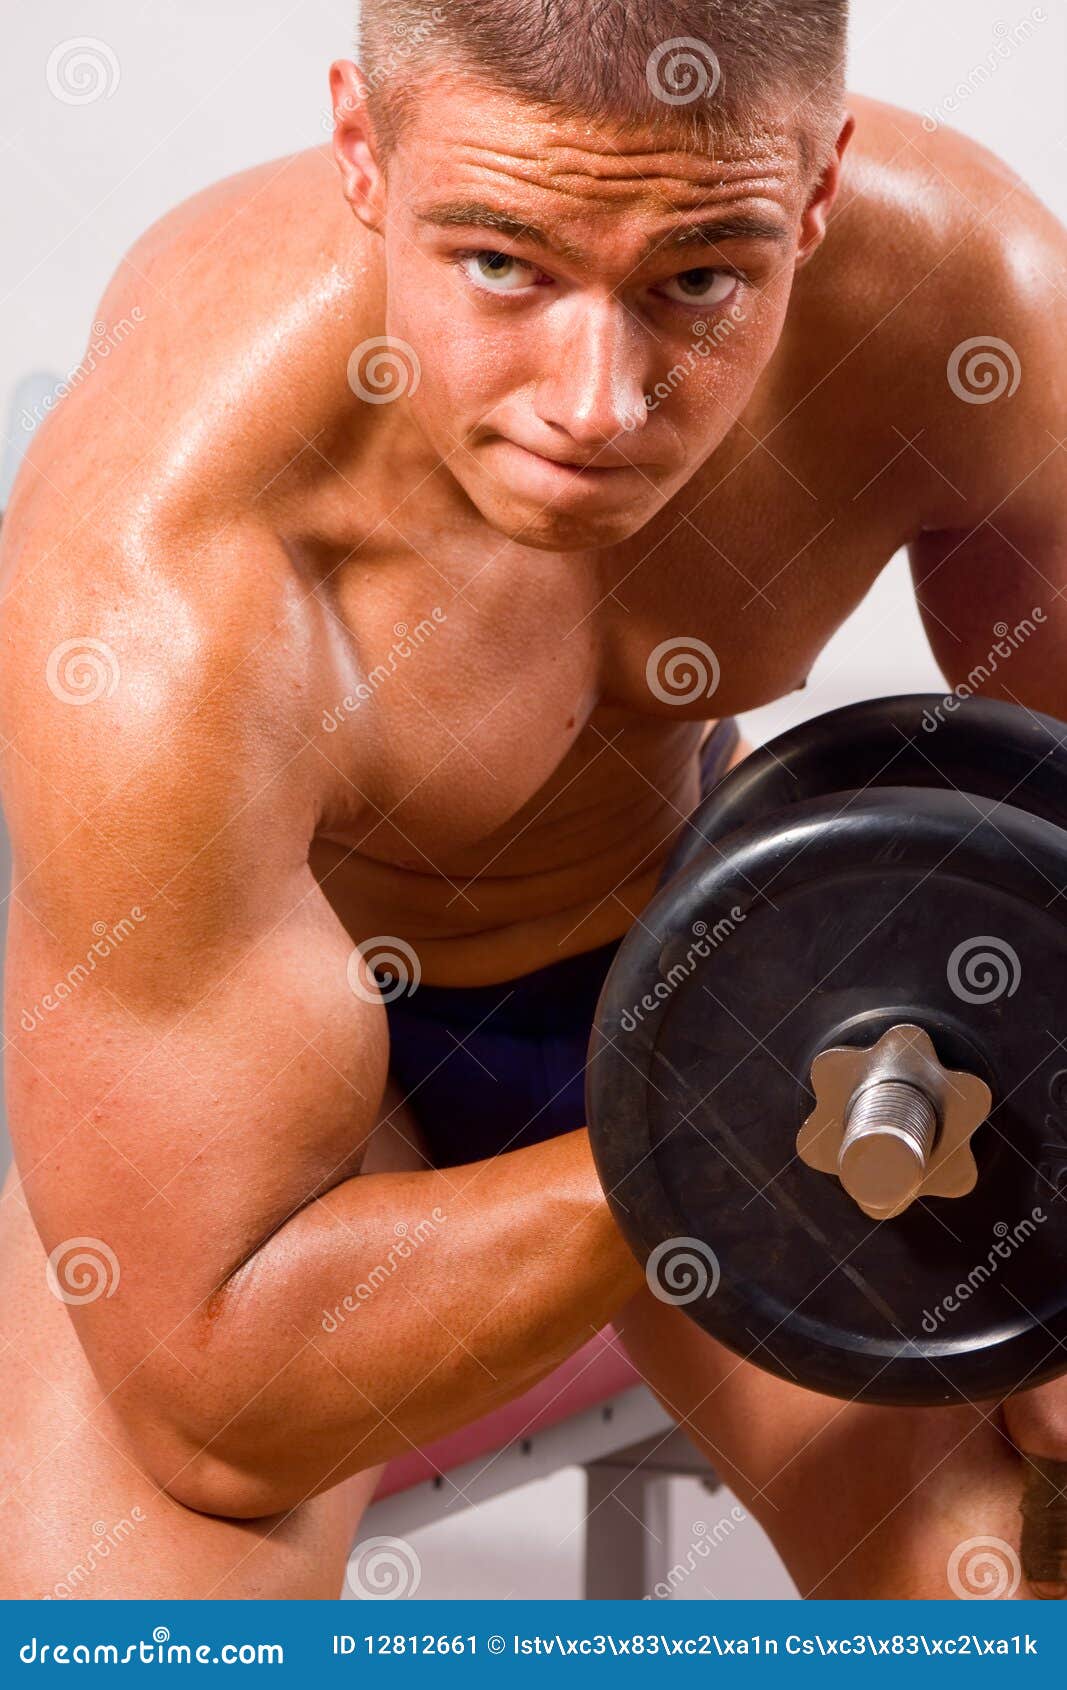 Amateur Bodybuilder Training Stock Image